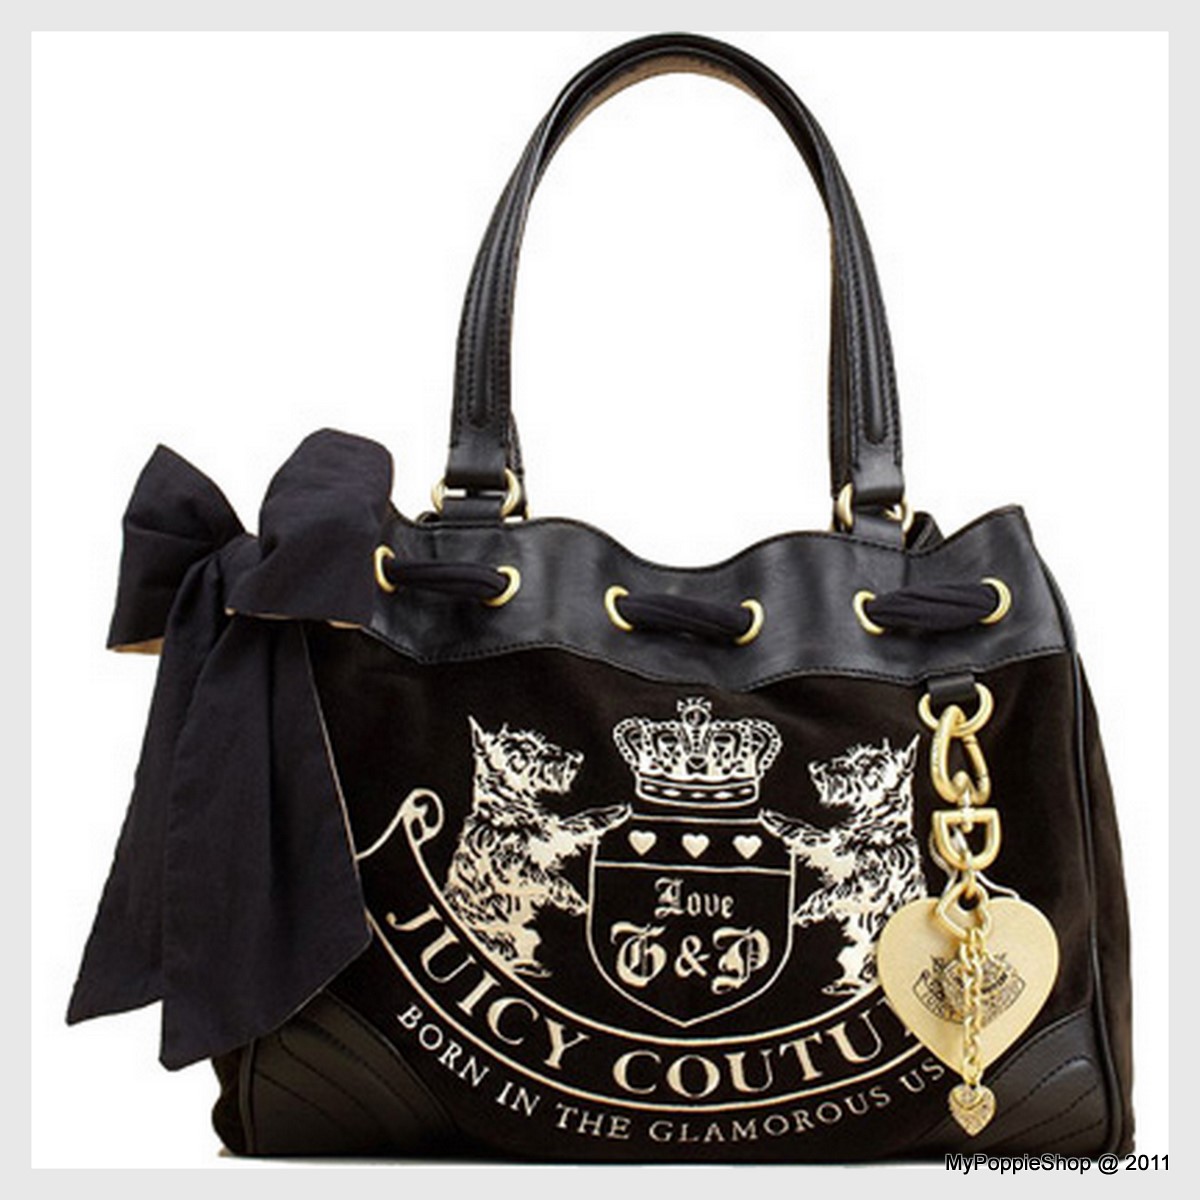 My Poppie Shop - Great designer deals everyday!: Juicy Couture Heritage ...